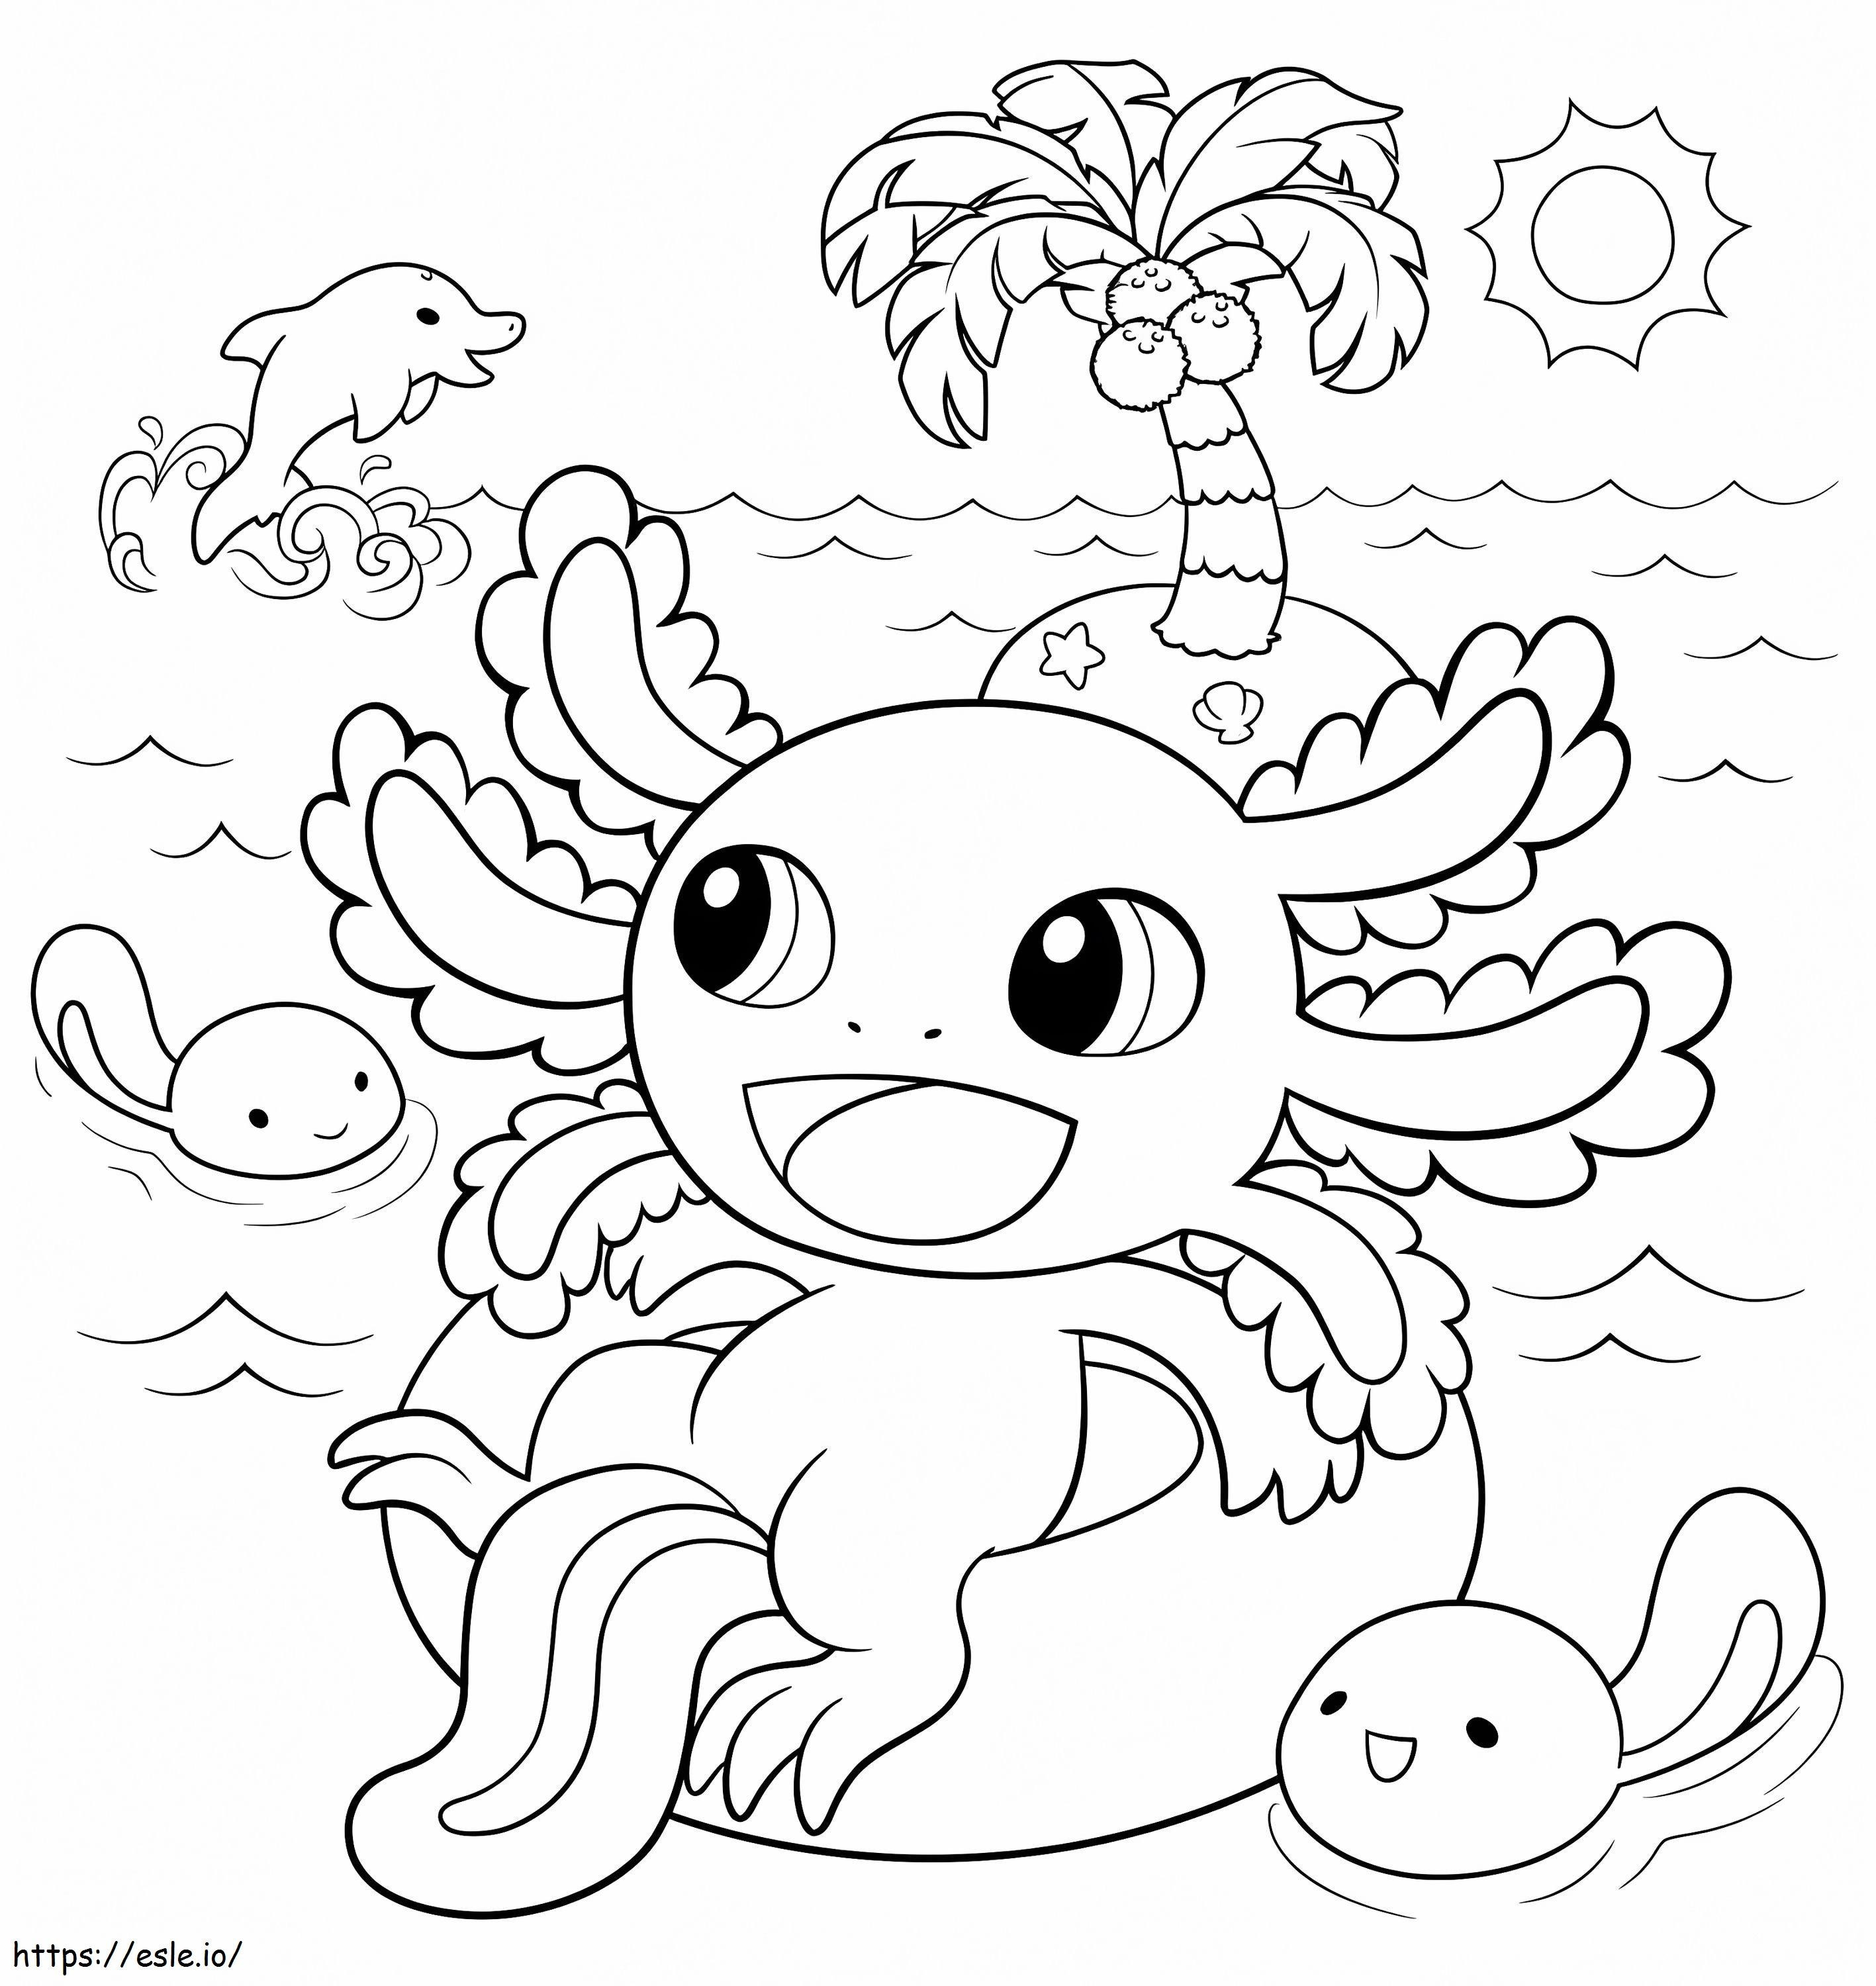 Coloriage Dessin animé Axolotl relaxant à imprimer dessin